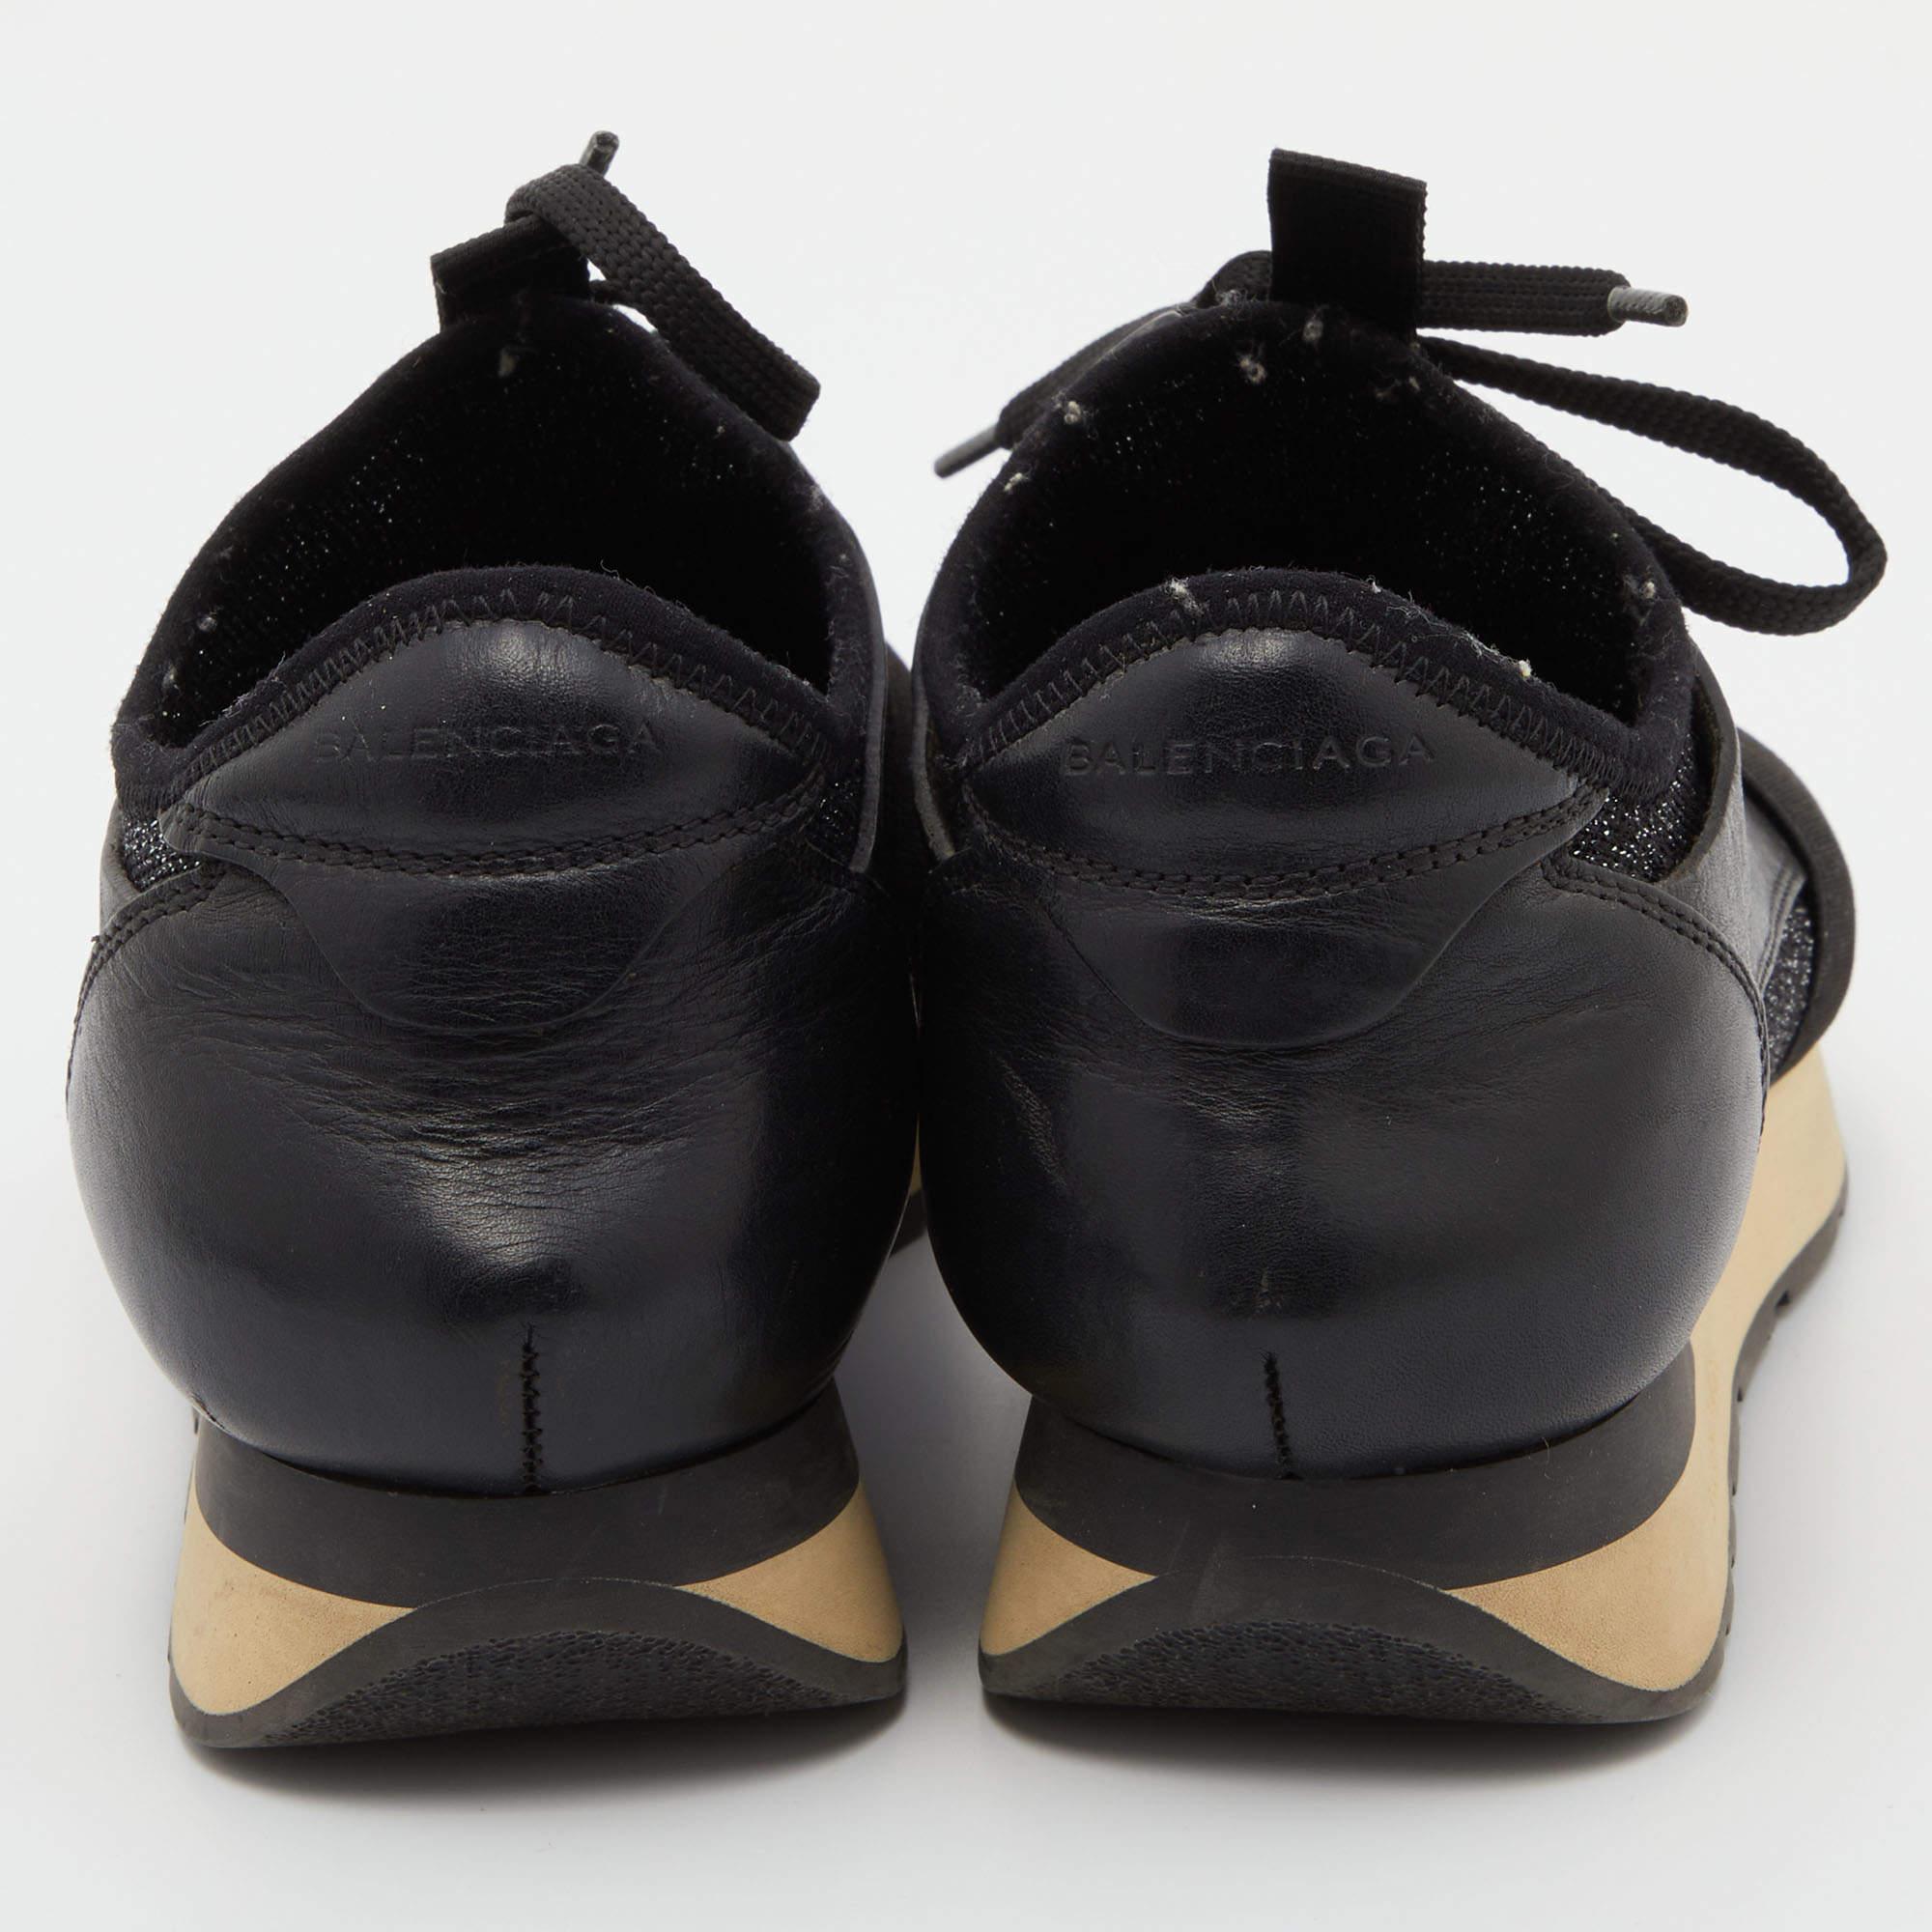 Balenciaga Black Leather and Glitter Fabric Race Runner Sneakers Size 38 In Good Condition For Sale In Dubai, Al Qouz 2